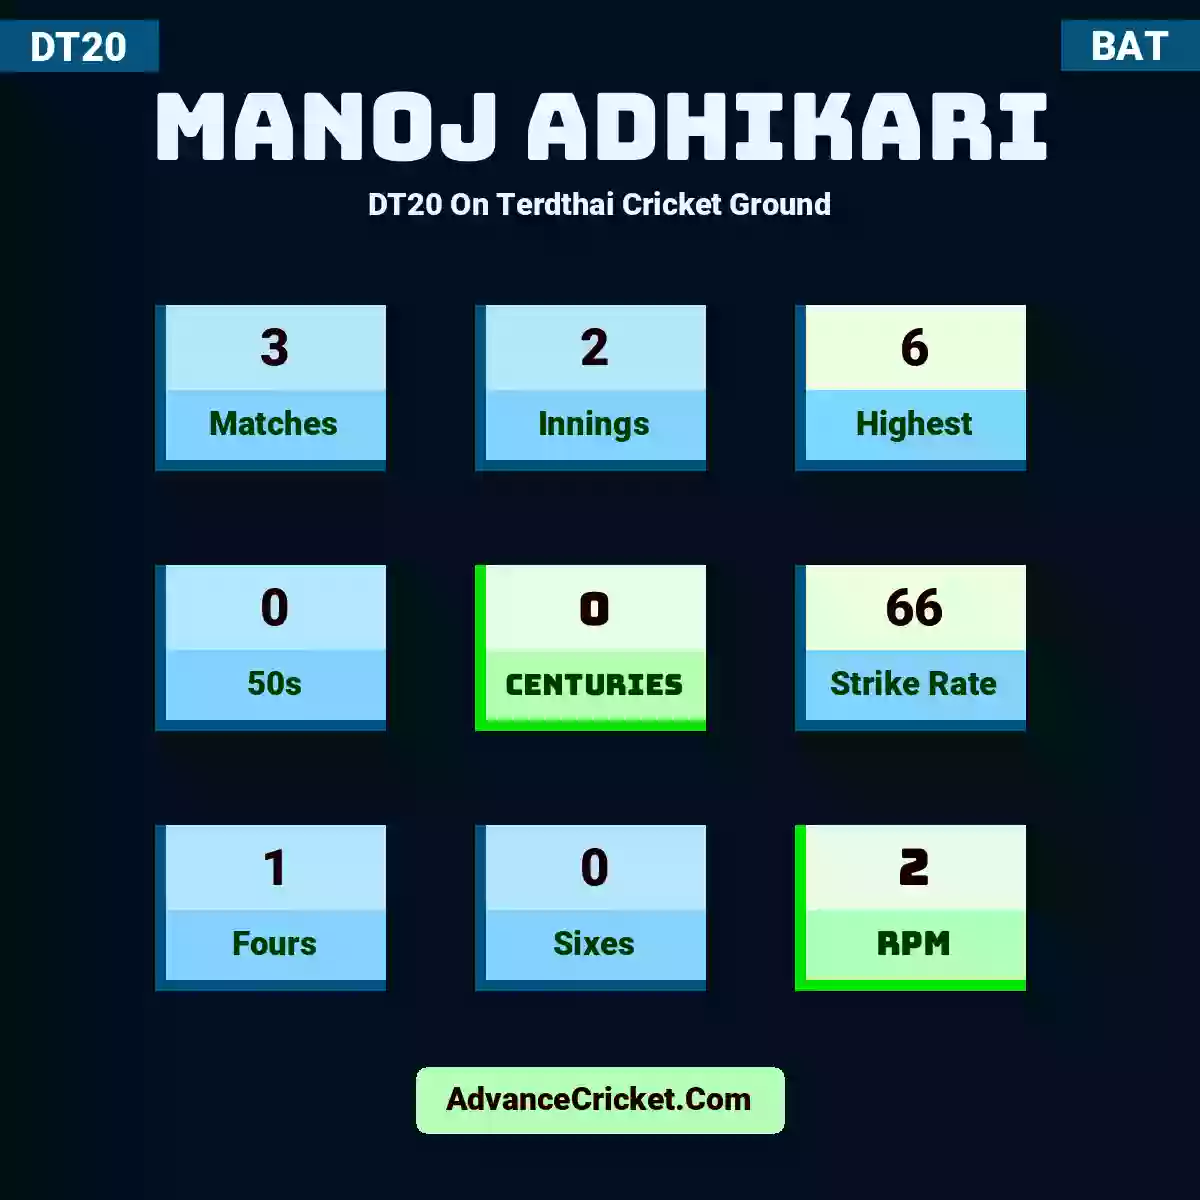 Manoj Adhikari DT20  On Terdthai Cricket Ground, Manoj Adhikari played 3 matches, scored 6 runs as highest, 0 half-centuries, and 0 centuries, with a strike rate of 66. M.Adhikari hit 1 fours and 0 sixes, with an RPM of 2.